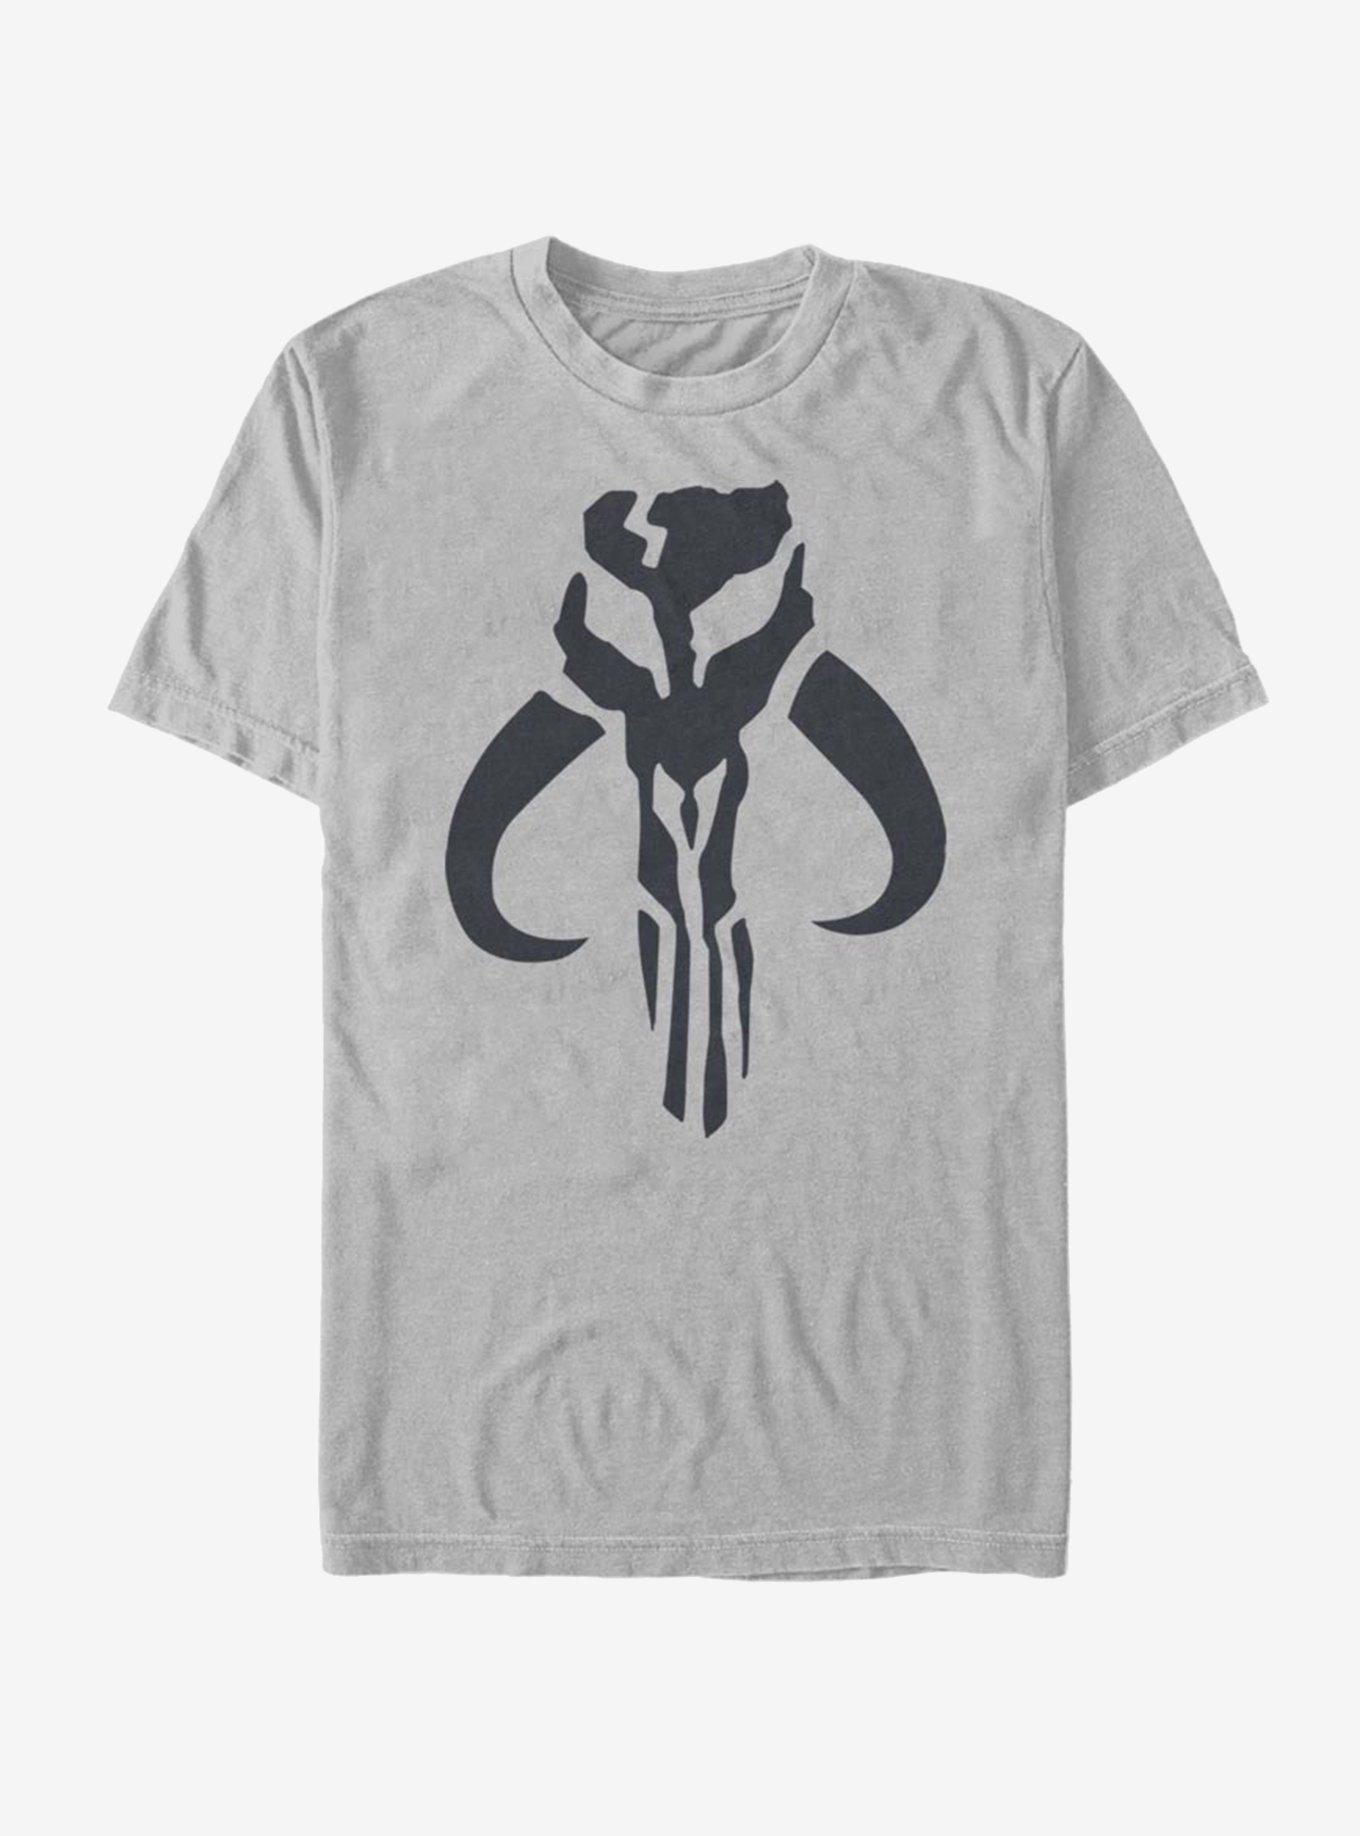 Star Wars The Mandalorian Simple Symbol T-Shirt, SILVER, hi-res